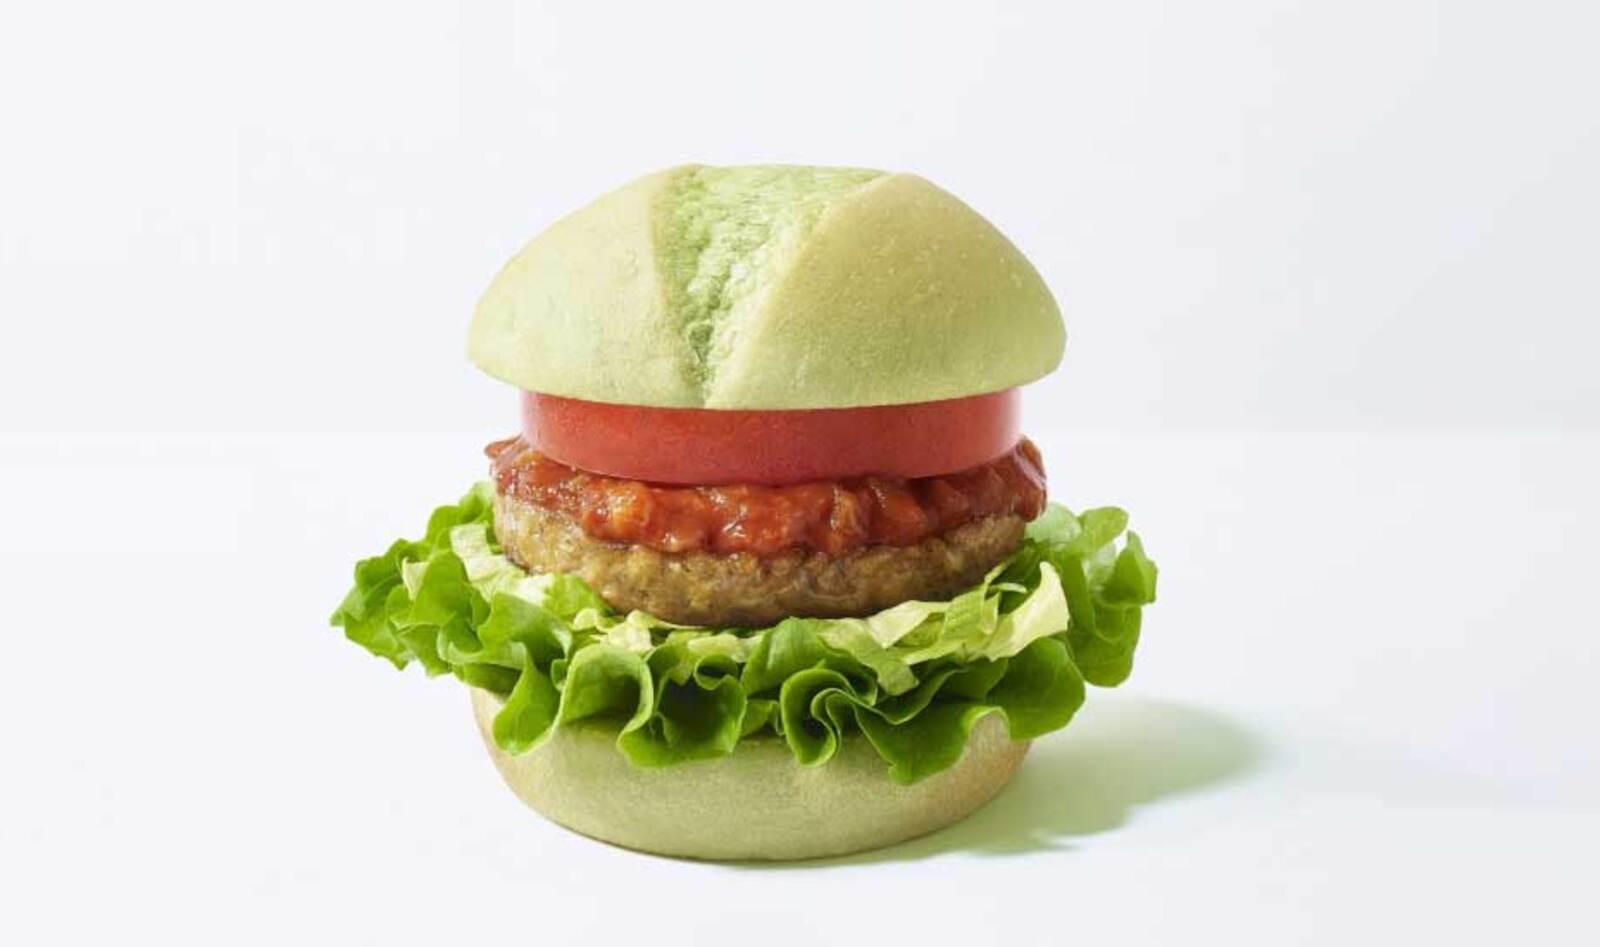 Japan’s Most Popular Chain Debuts Green-Hued Vegan Burger&nbsp;